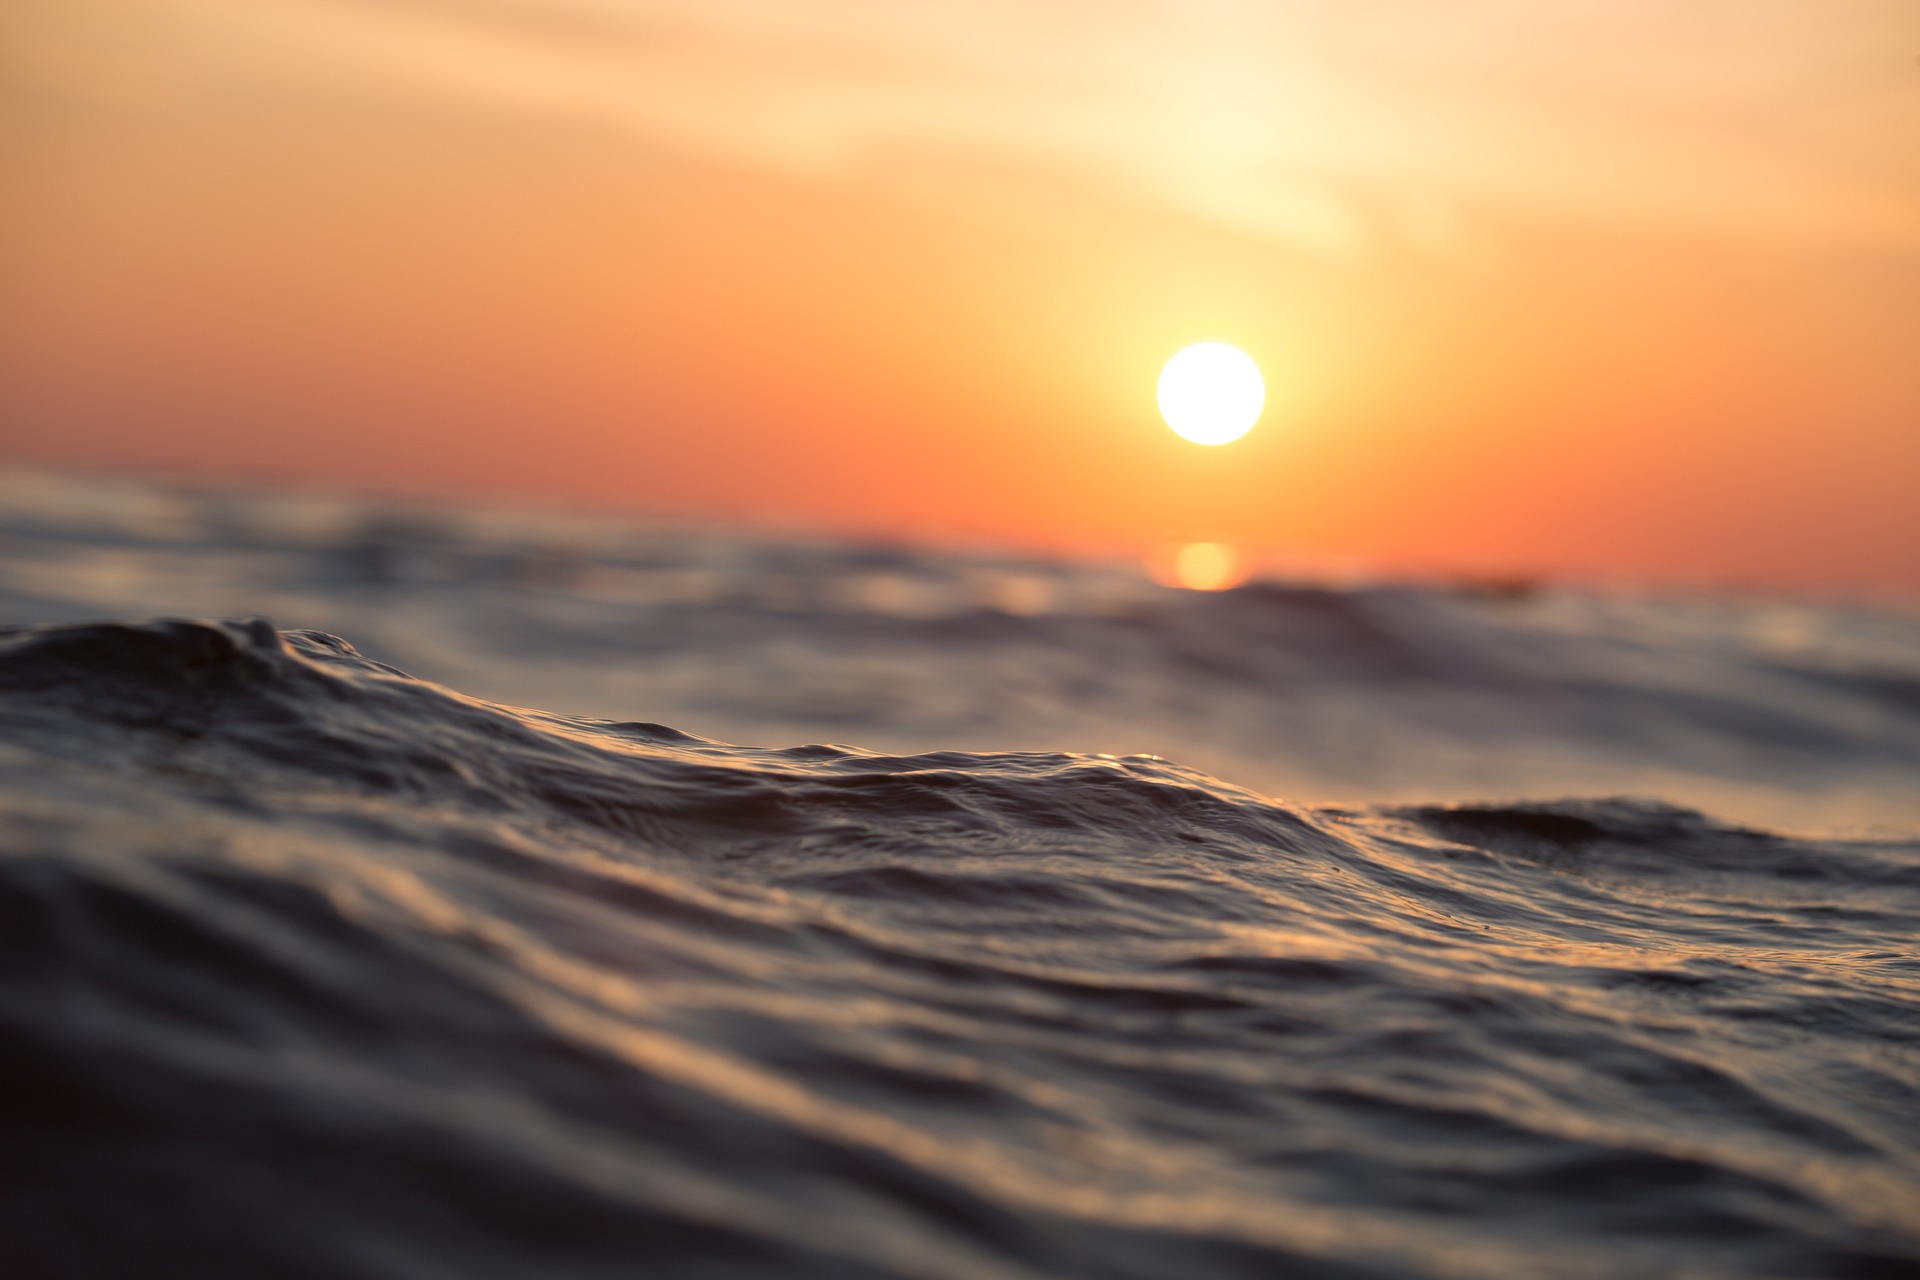 Ocean, źródło: Pixabay